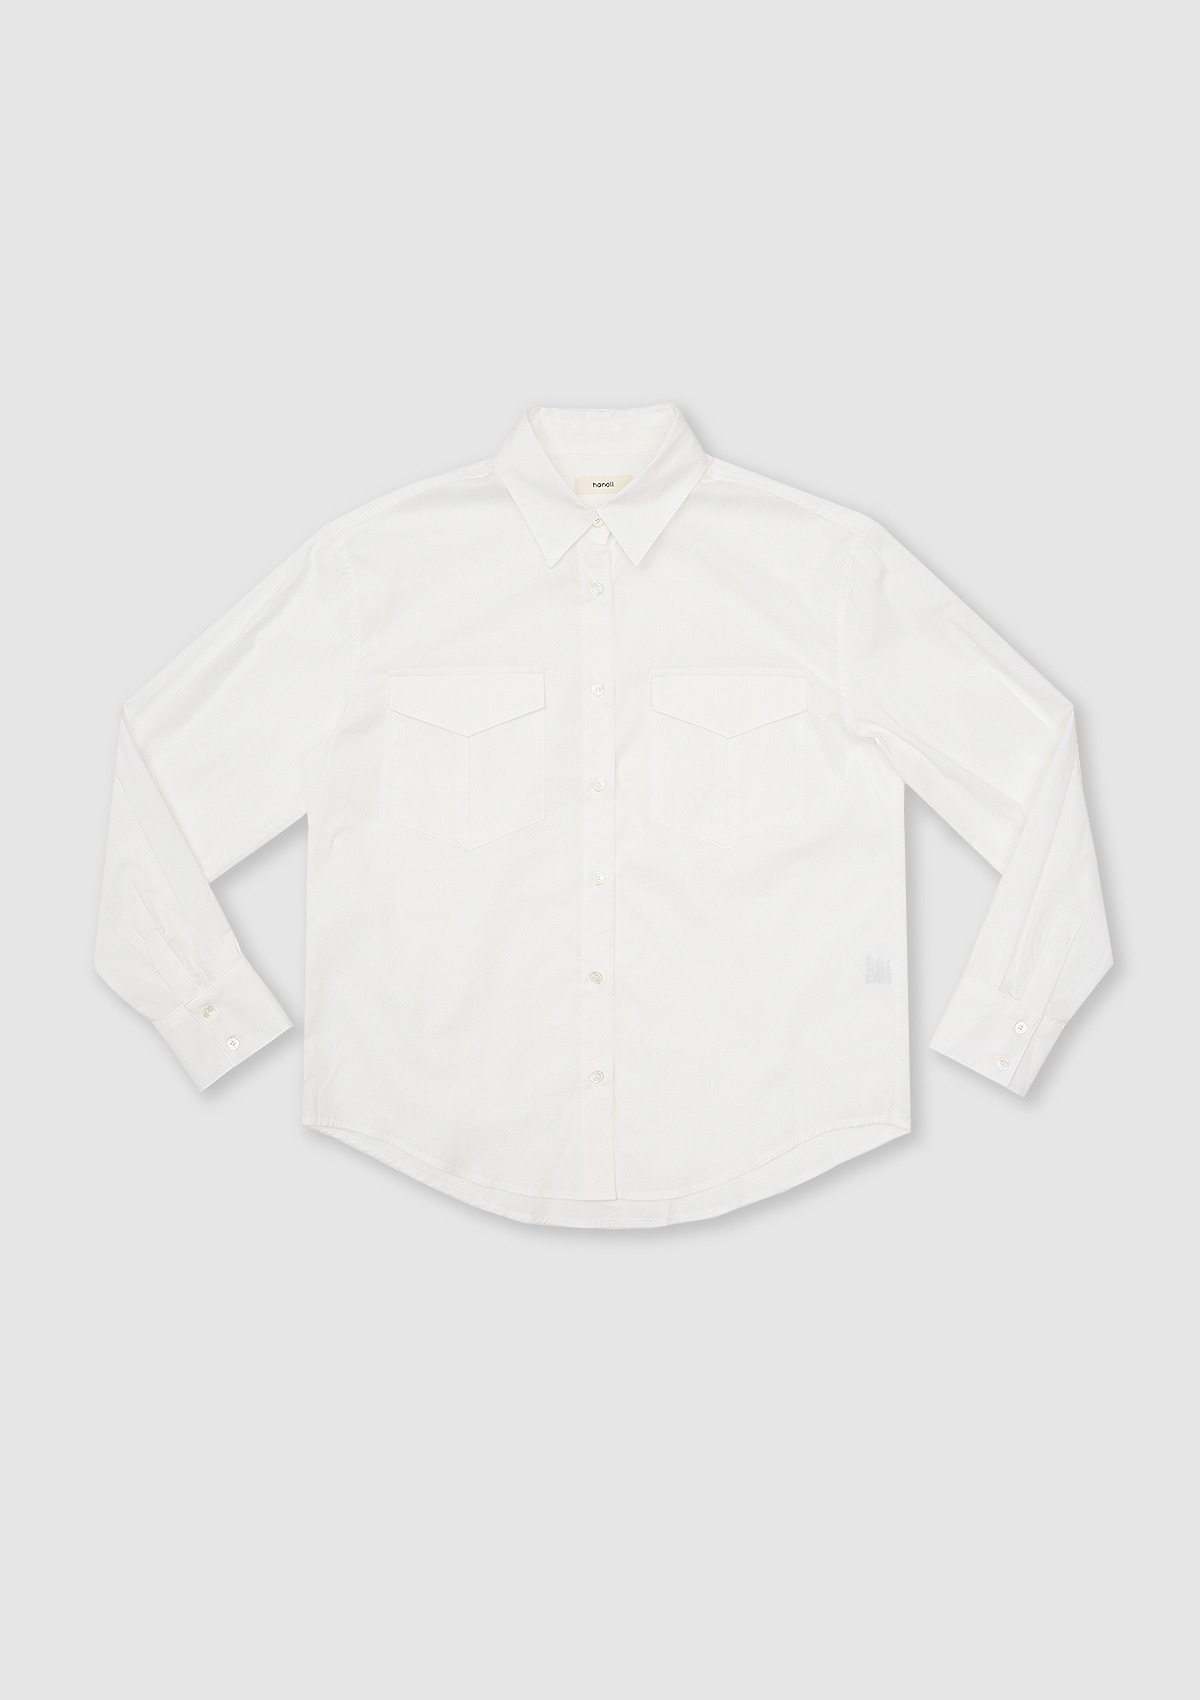 Pocket Shirt (White)